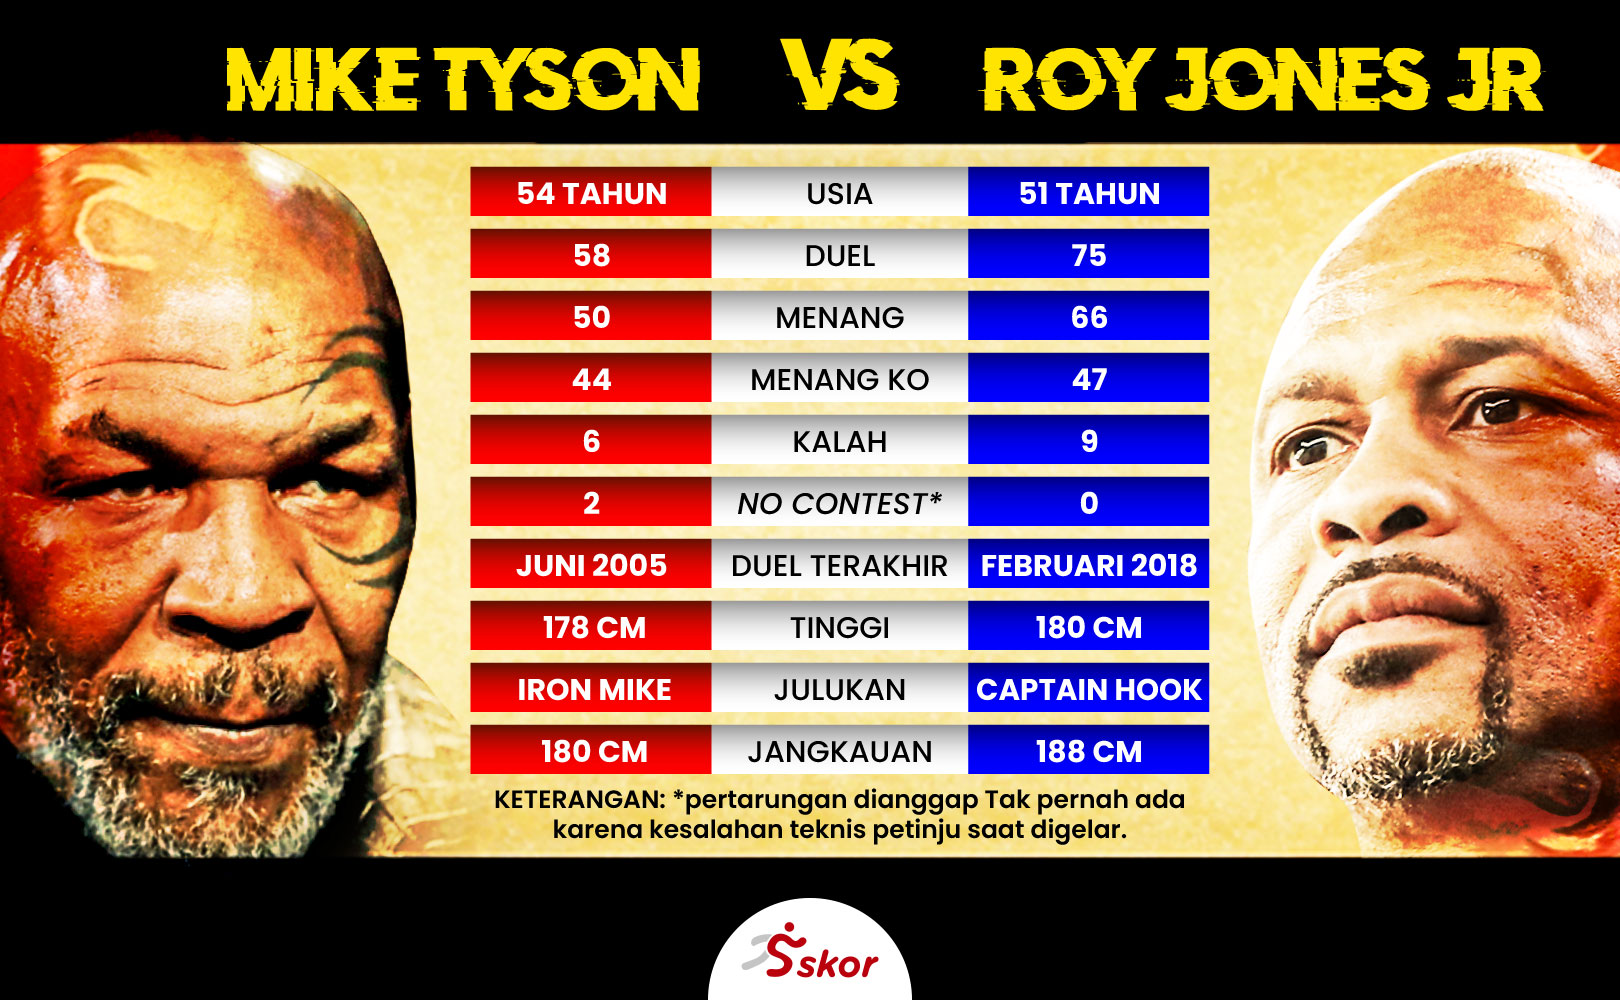 Mike Tyson vs Roy Jones Jr, Amir Khan Jagokan Captain Hook